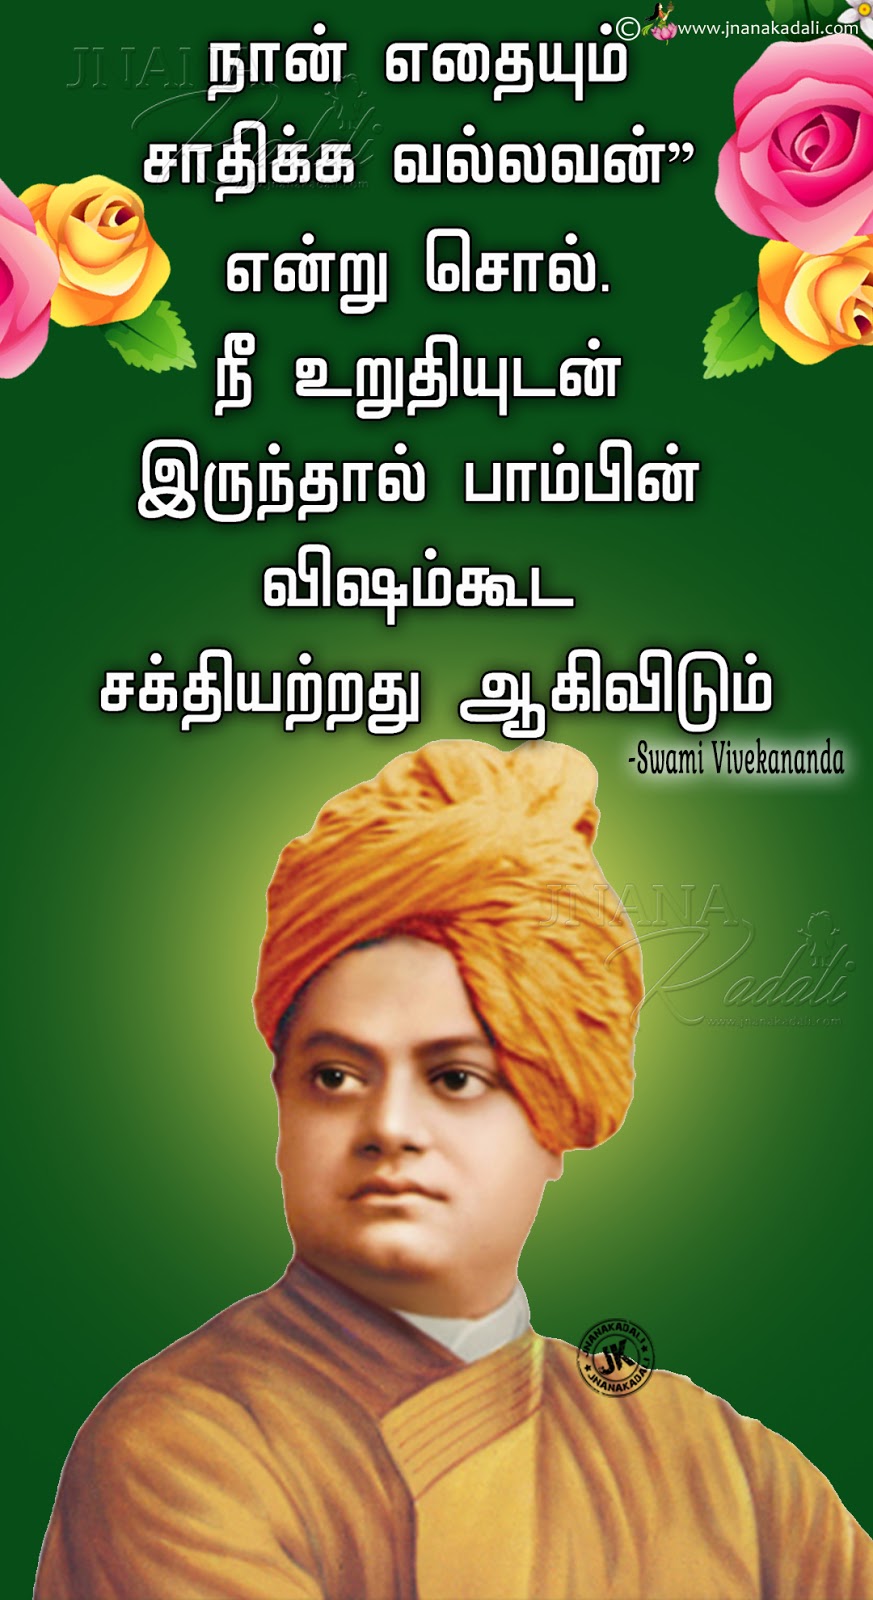 Tamil swami vivekananda motivational sayings with hd wallpapers